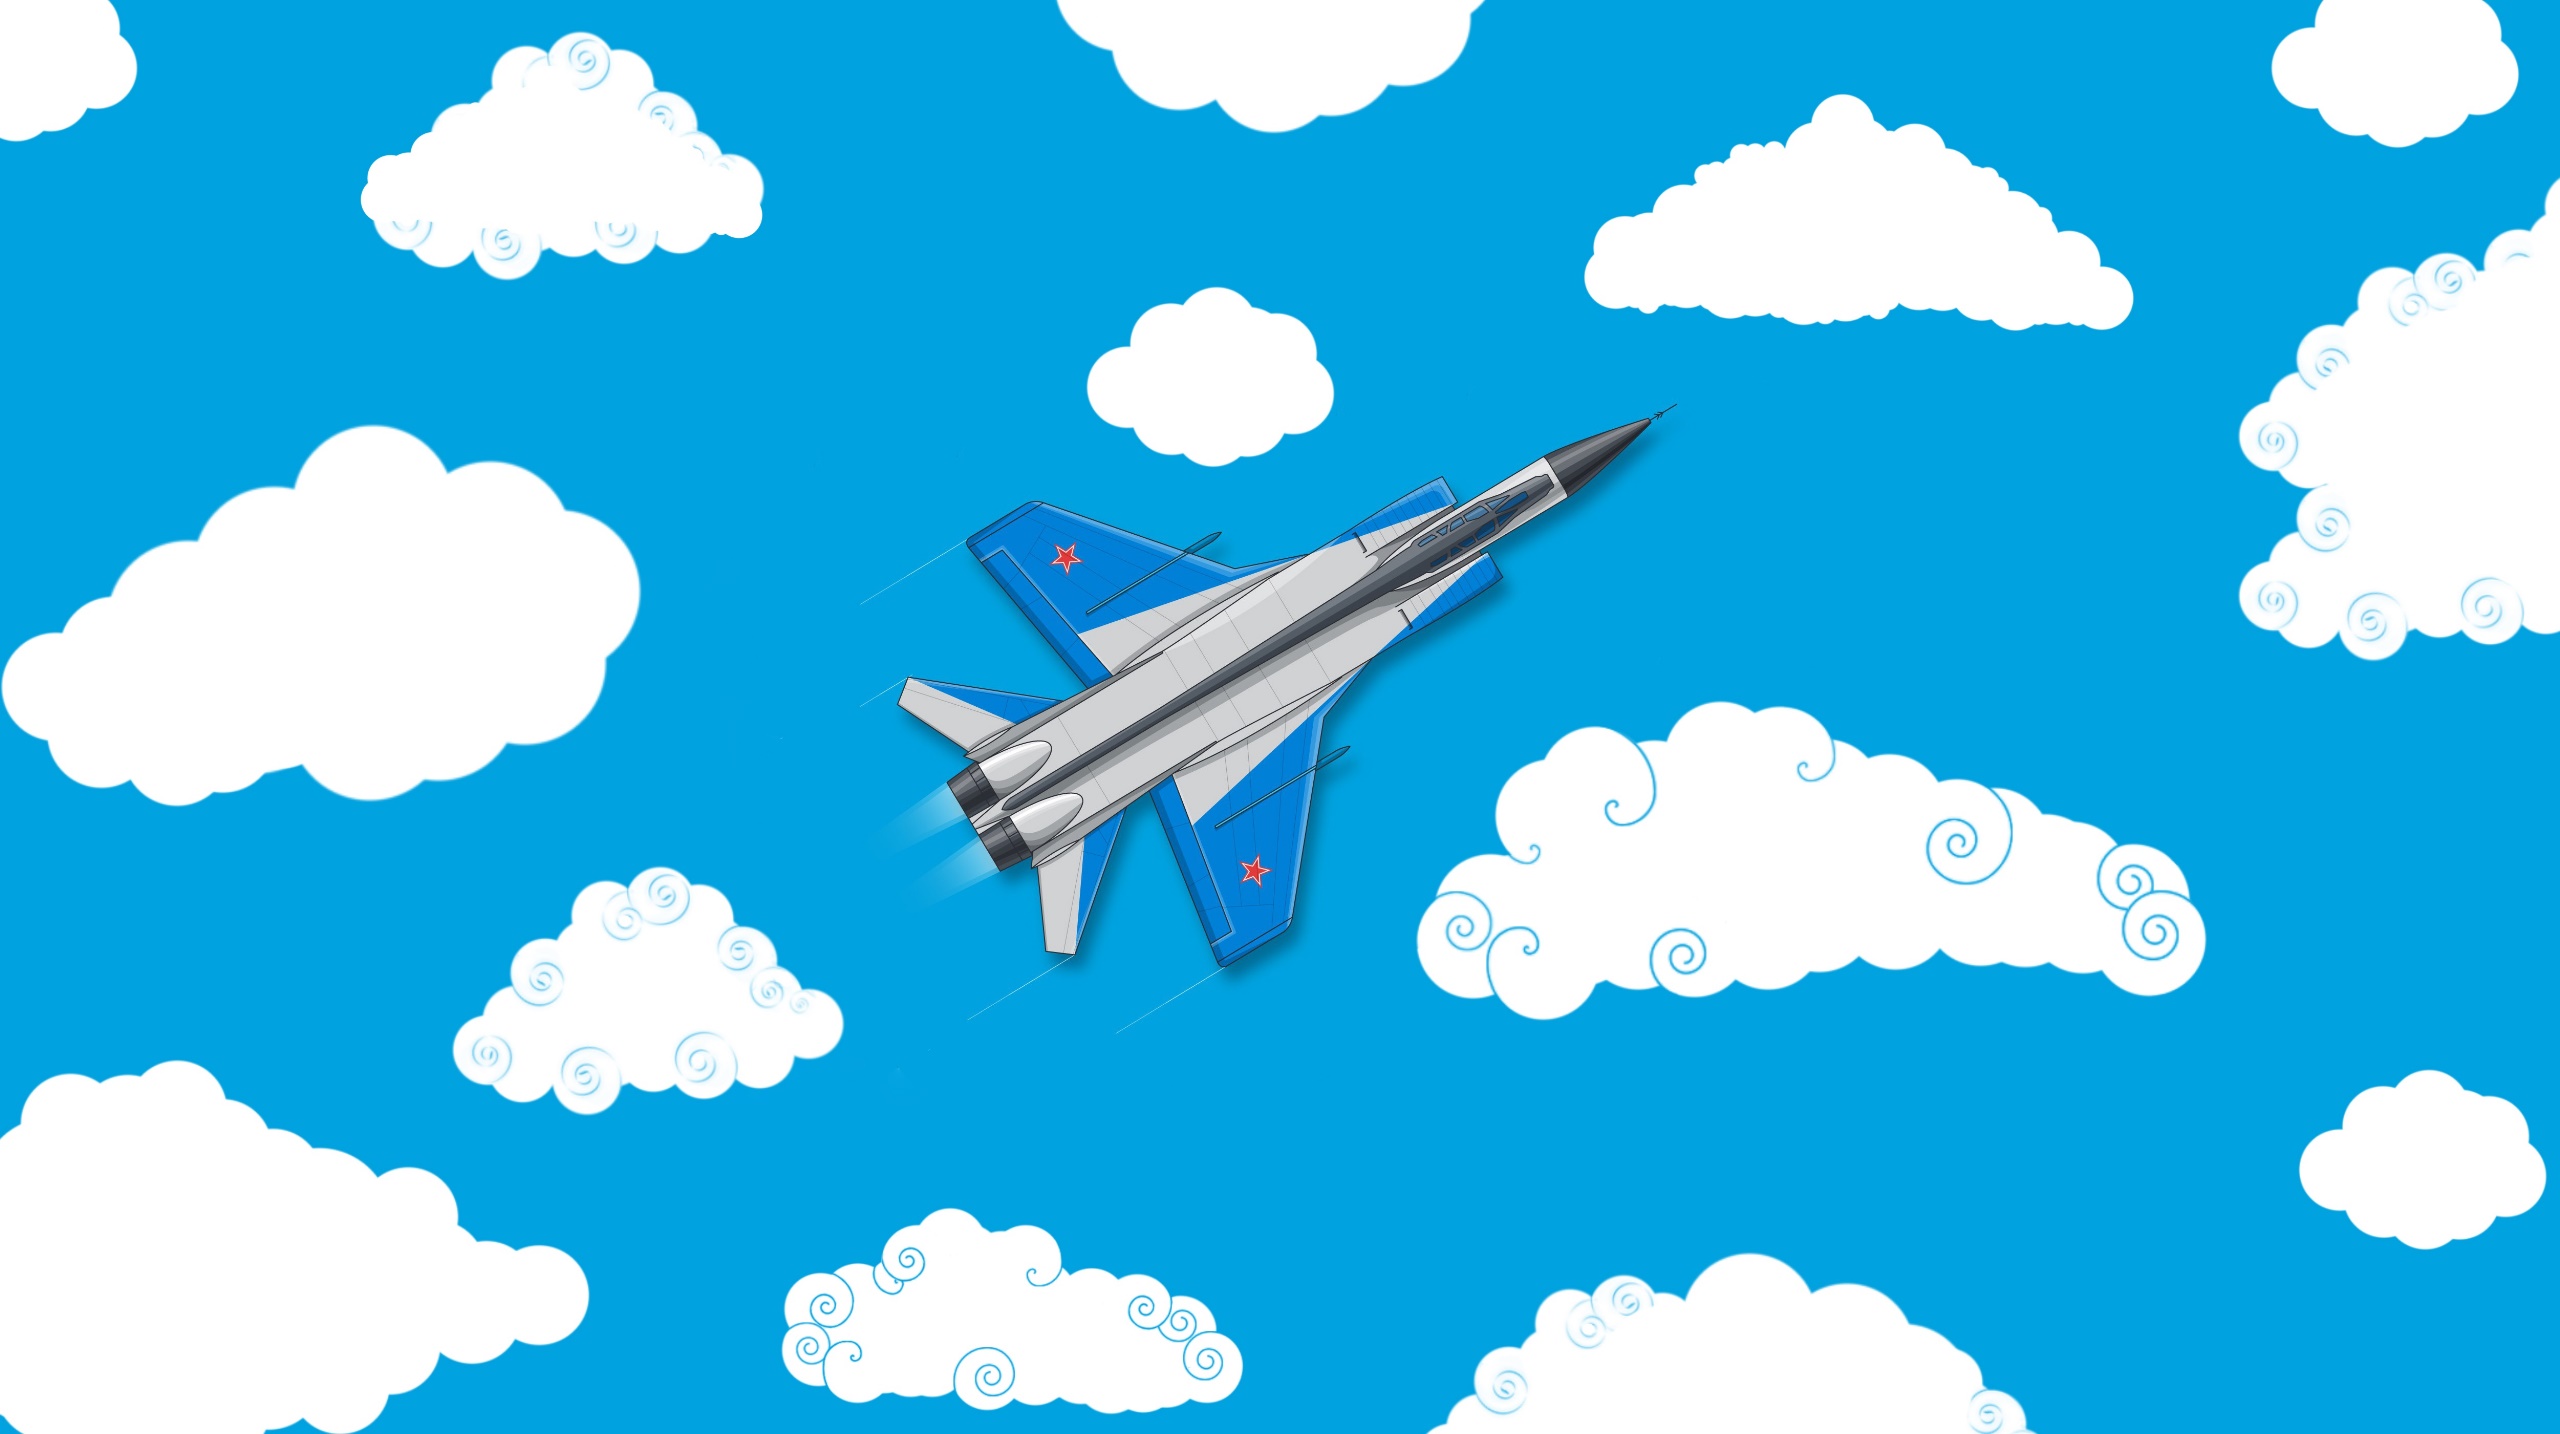 General 2560x1434 artwork aircraft vehicle cyan cyan background blue minimalism clouds military aircraft